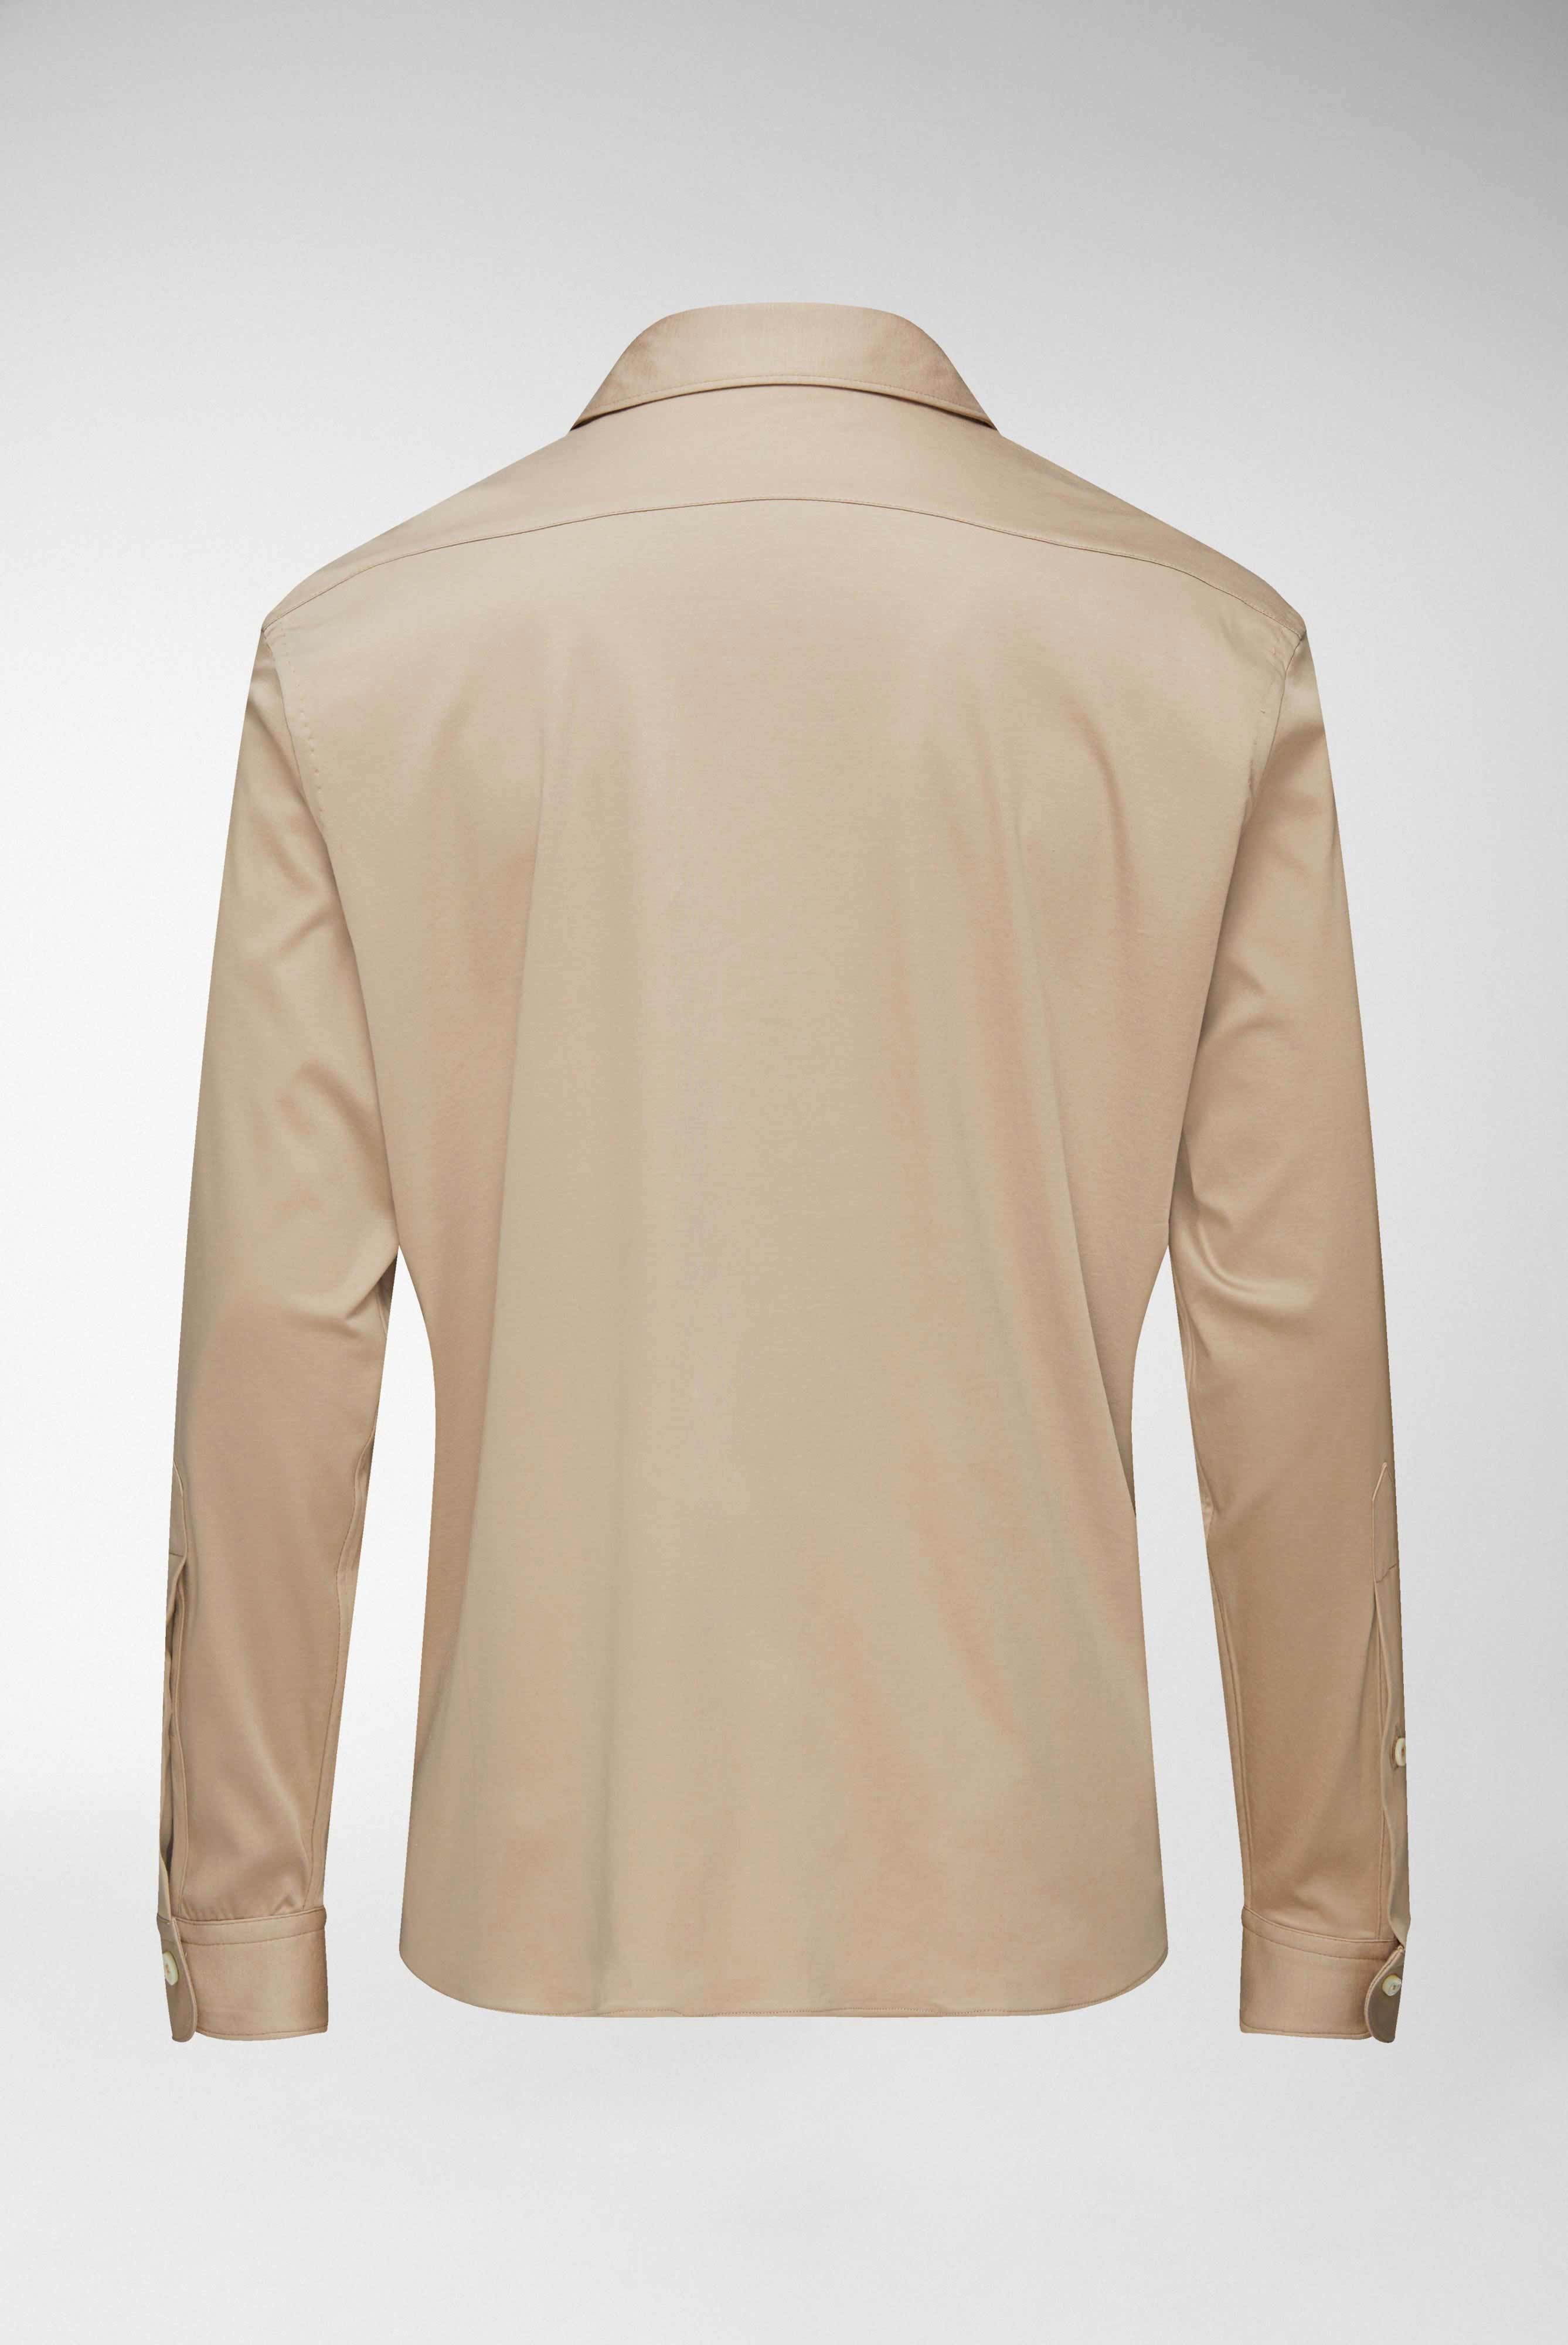 Casual Hemden+Jersey Hemd aus Schweizer Baumwolle Tailor Fit+20.1683.UC.180031.140.XL